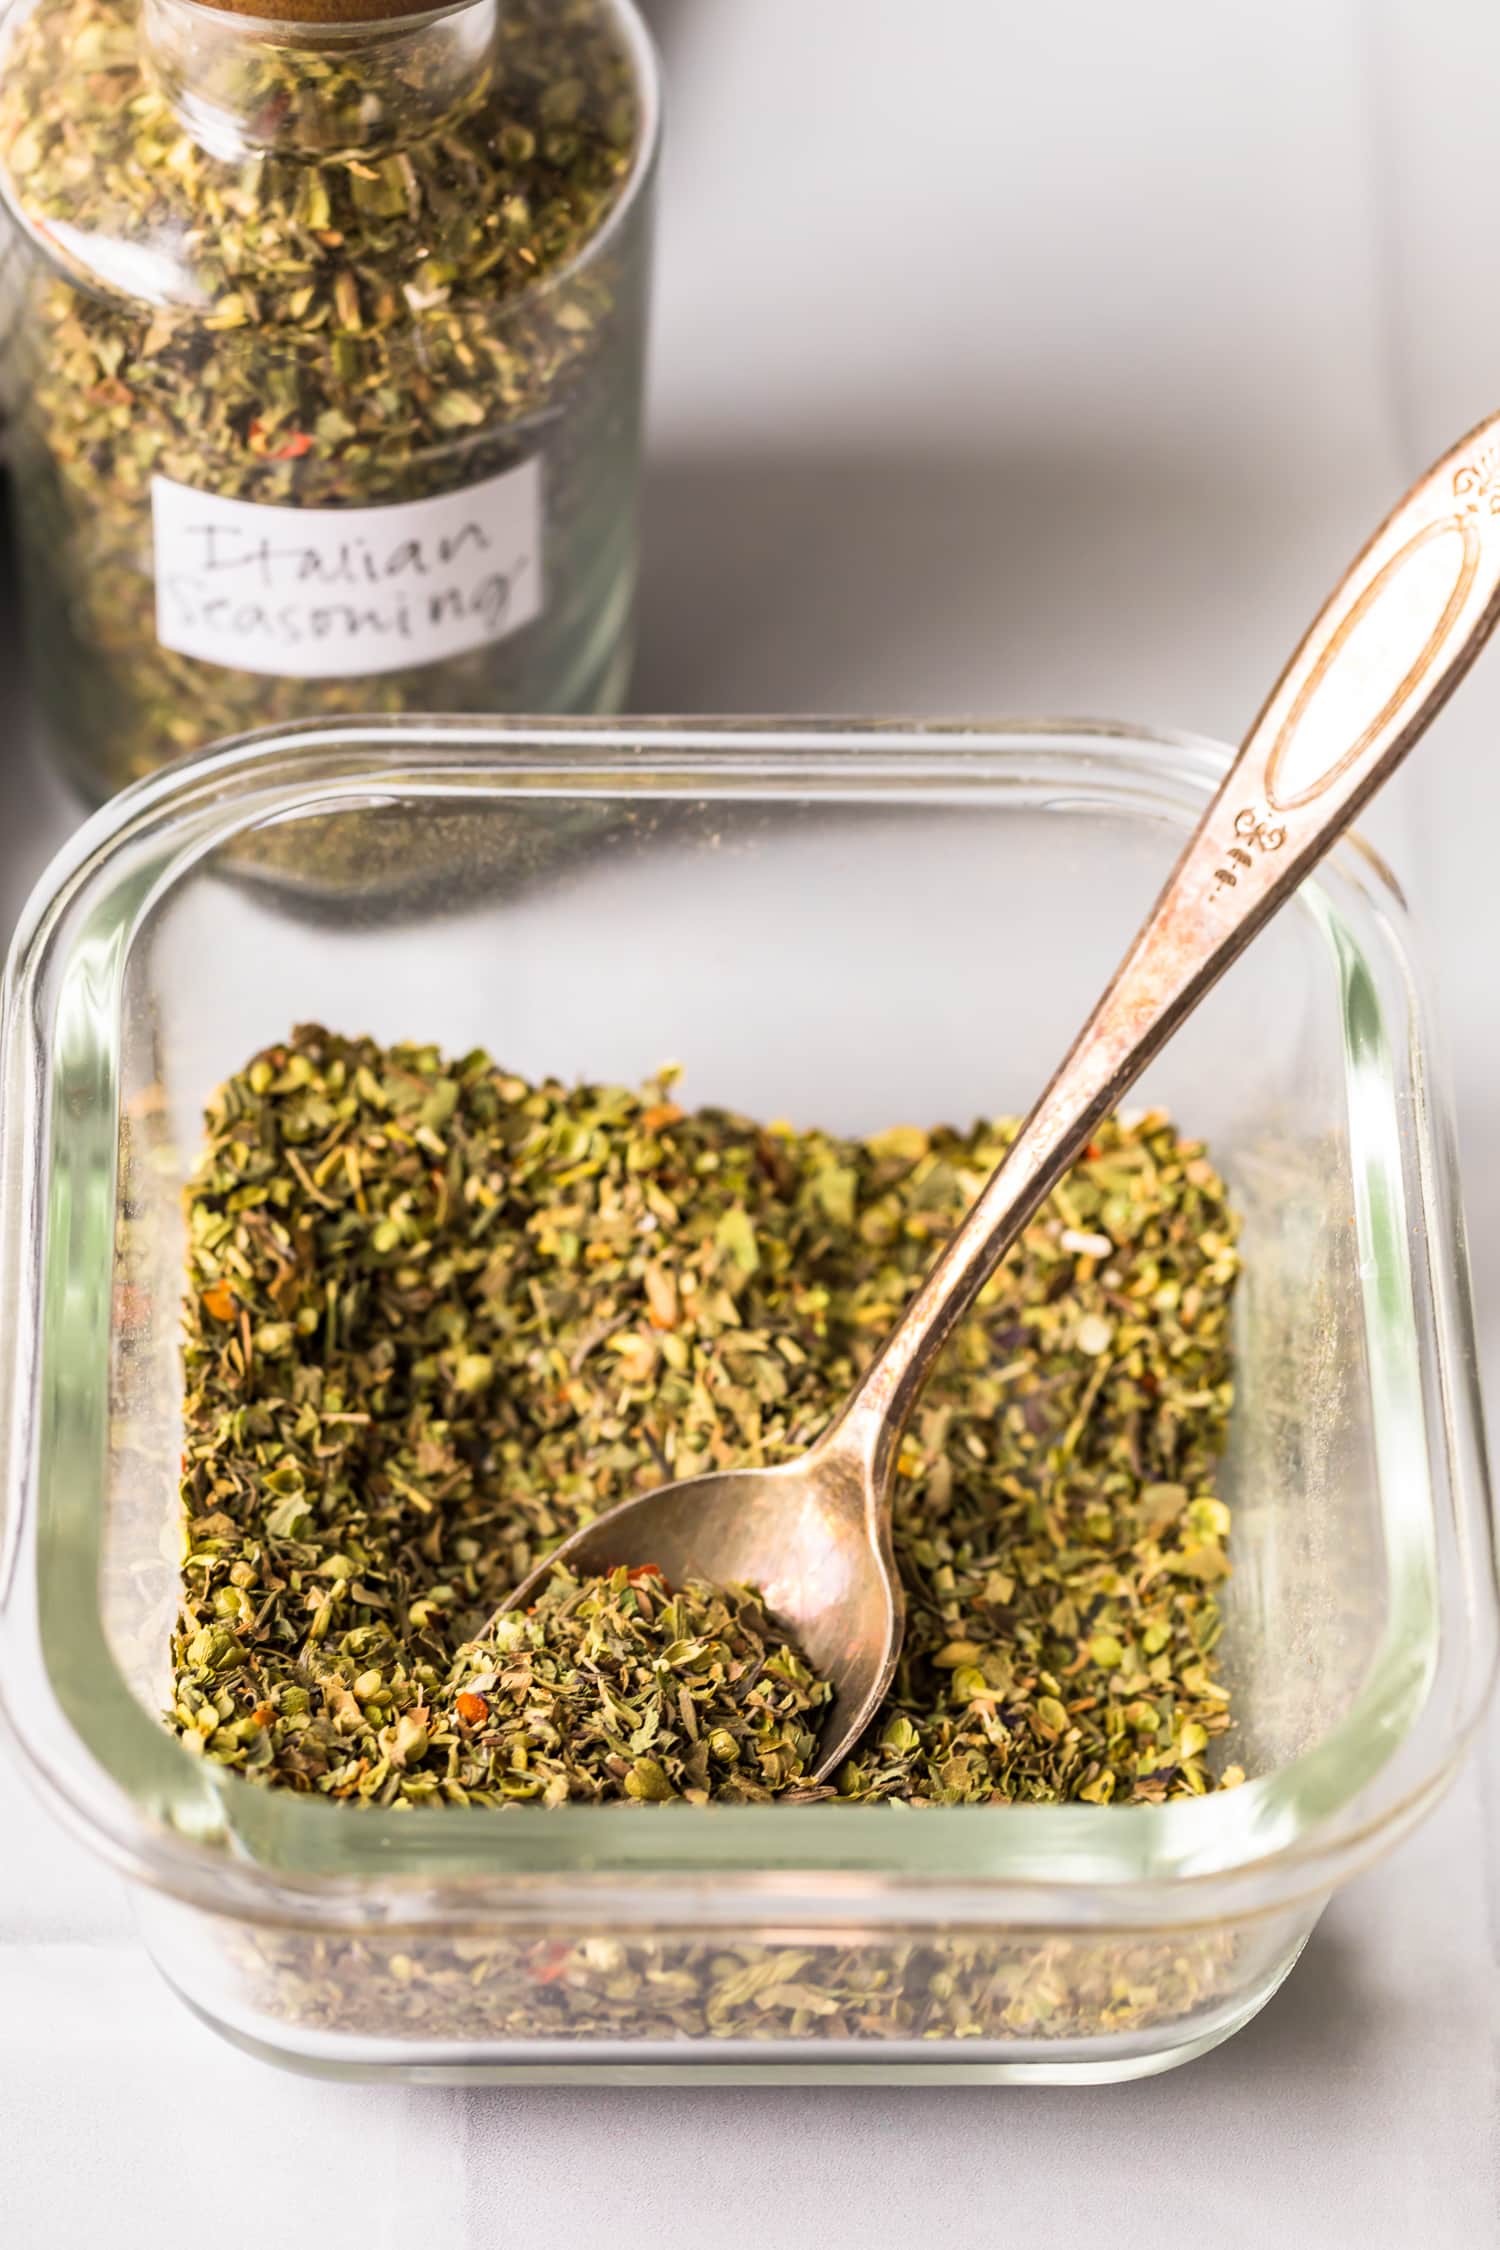 Herb mixture in a glass jar